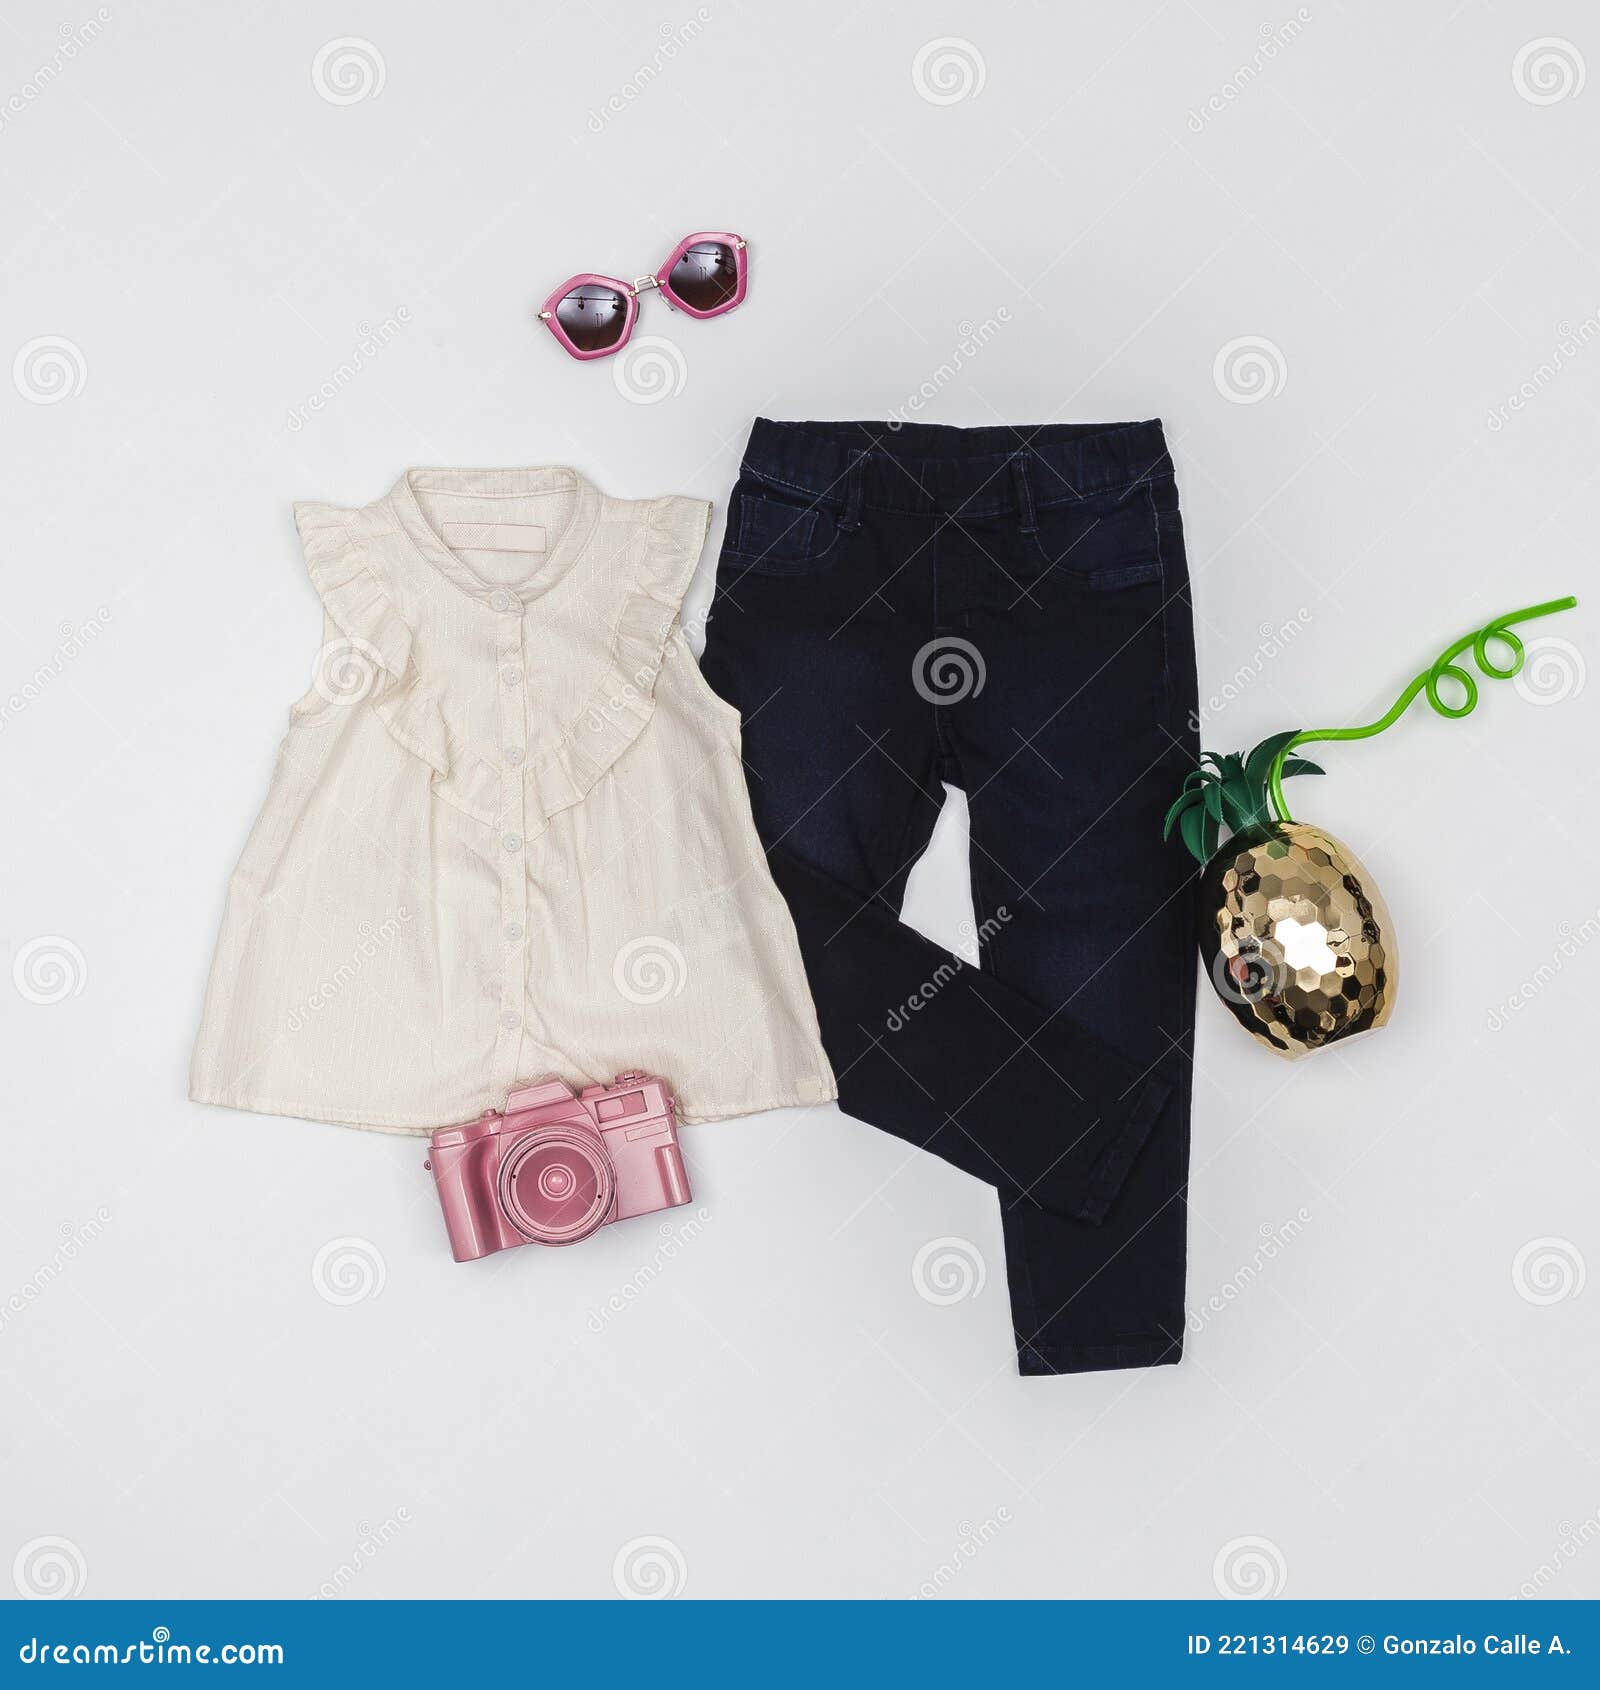 Women`s Children`s Fashion - Clothes for Girls; Photo on White ...